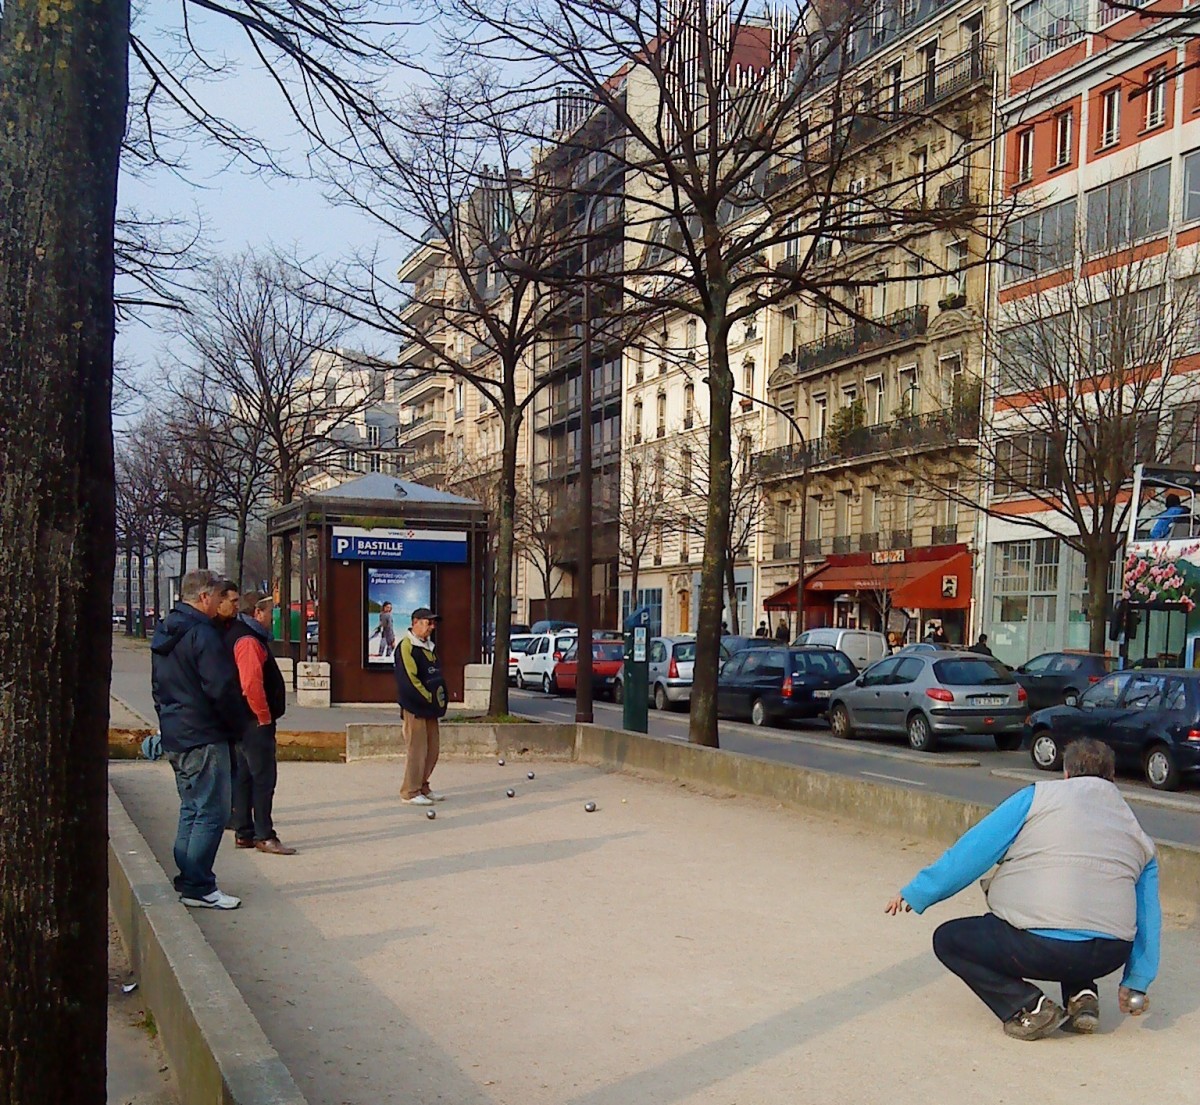 Parisians love to play boules.